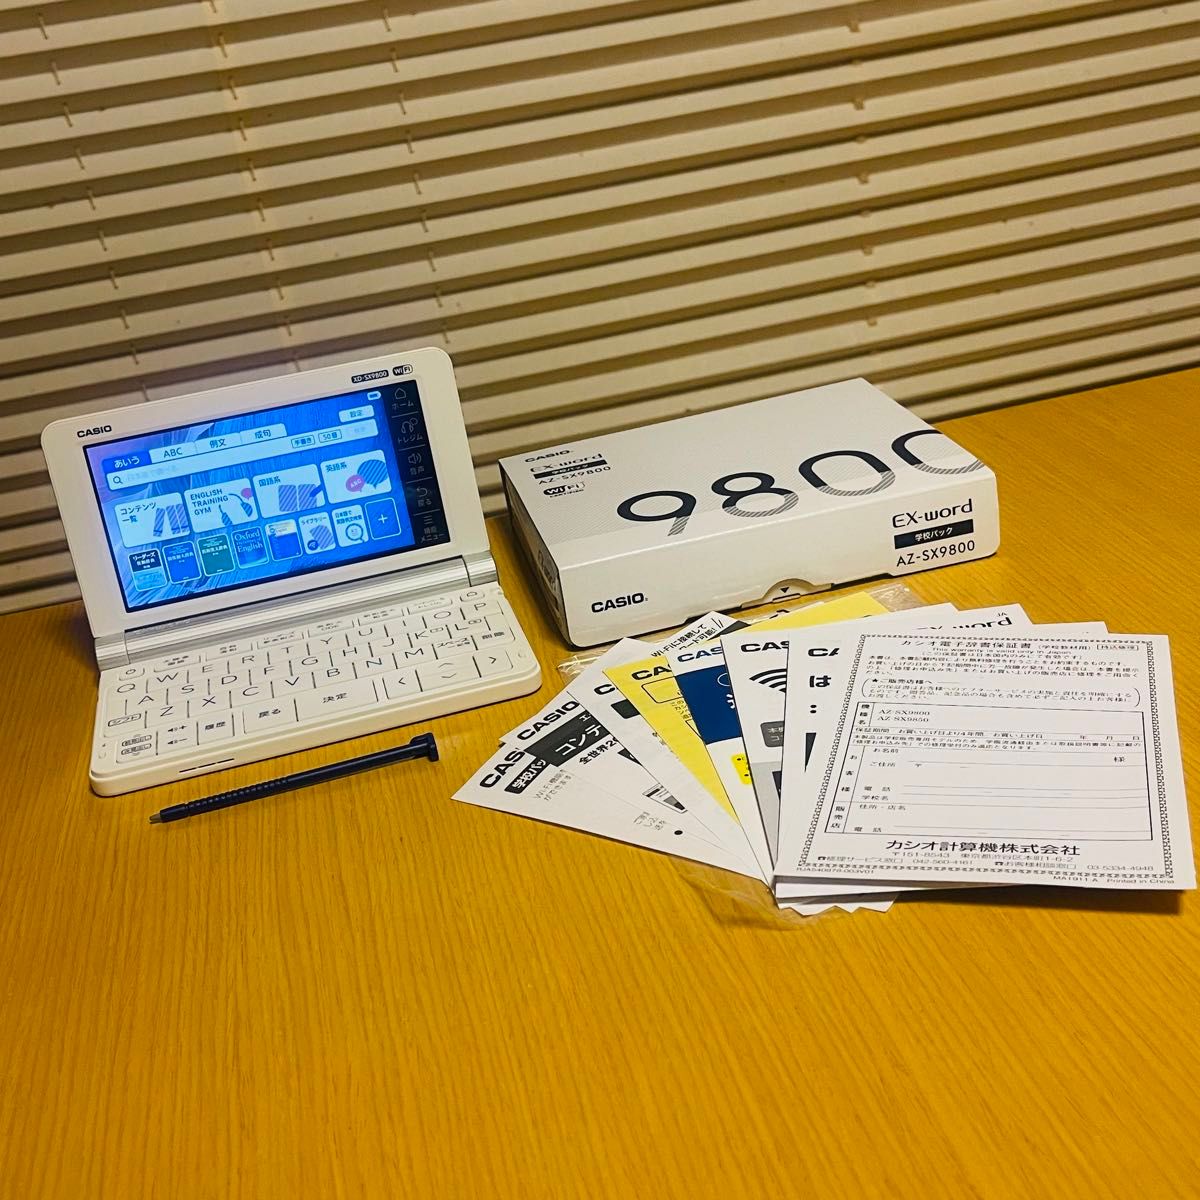 無料配達 CASIO EX-word AZ-SX9800 電子辞書 中国語コンテンツ追加済